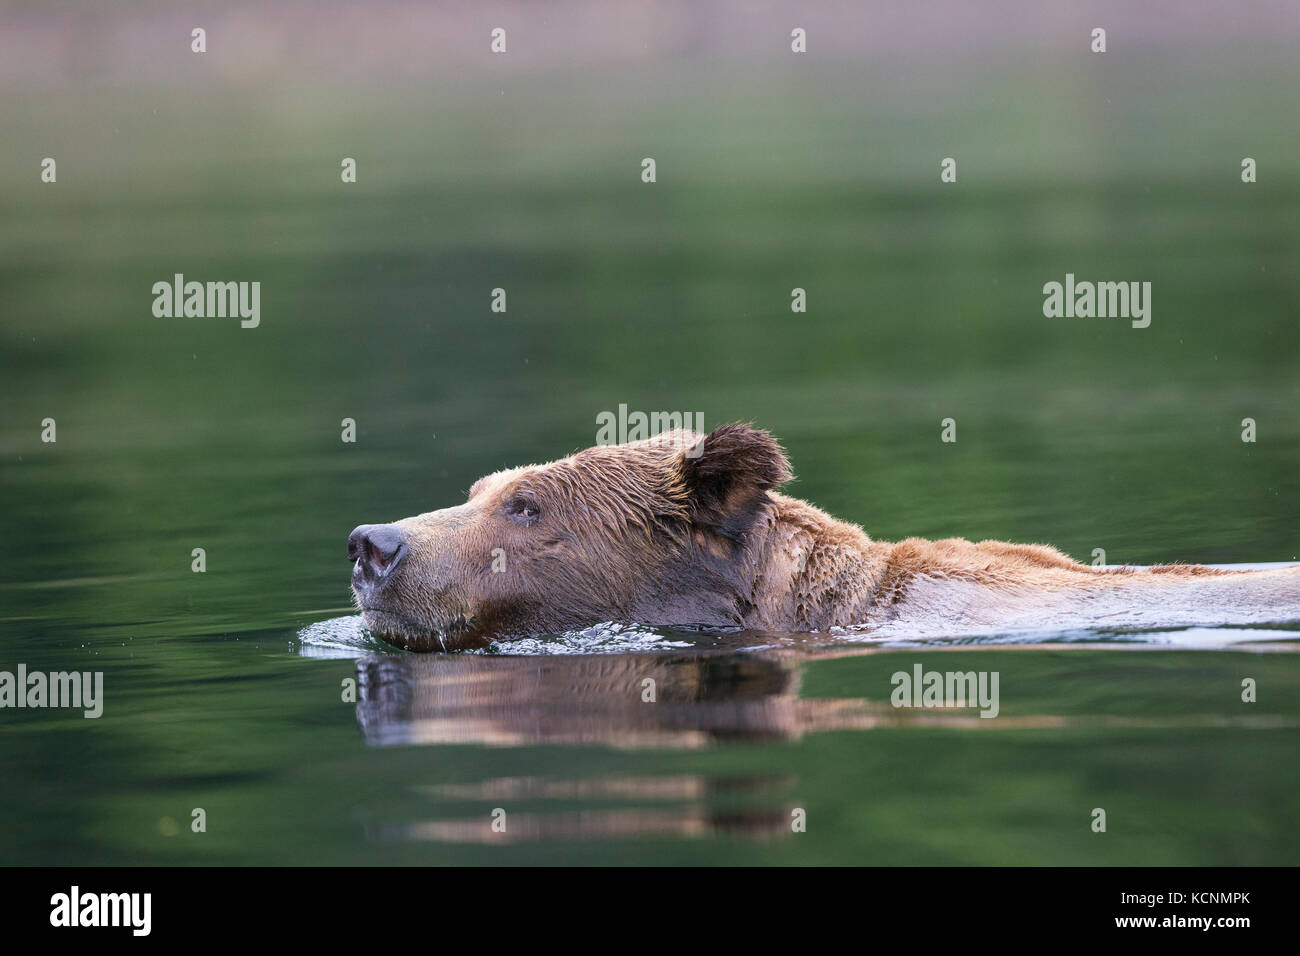 Grizzly bear (Ursus arctos horribilis), large male, swimming, Khutzeymateen Inlet, Khutzeymateen Grizzly Bear Sanctuary, British Columbia, Canada. Stock Photo